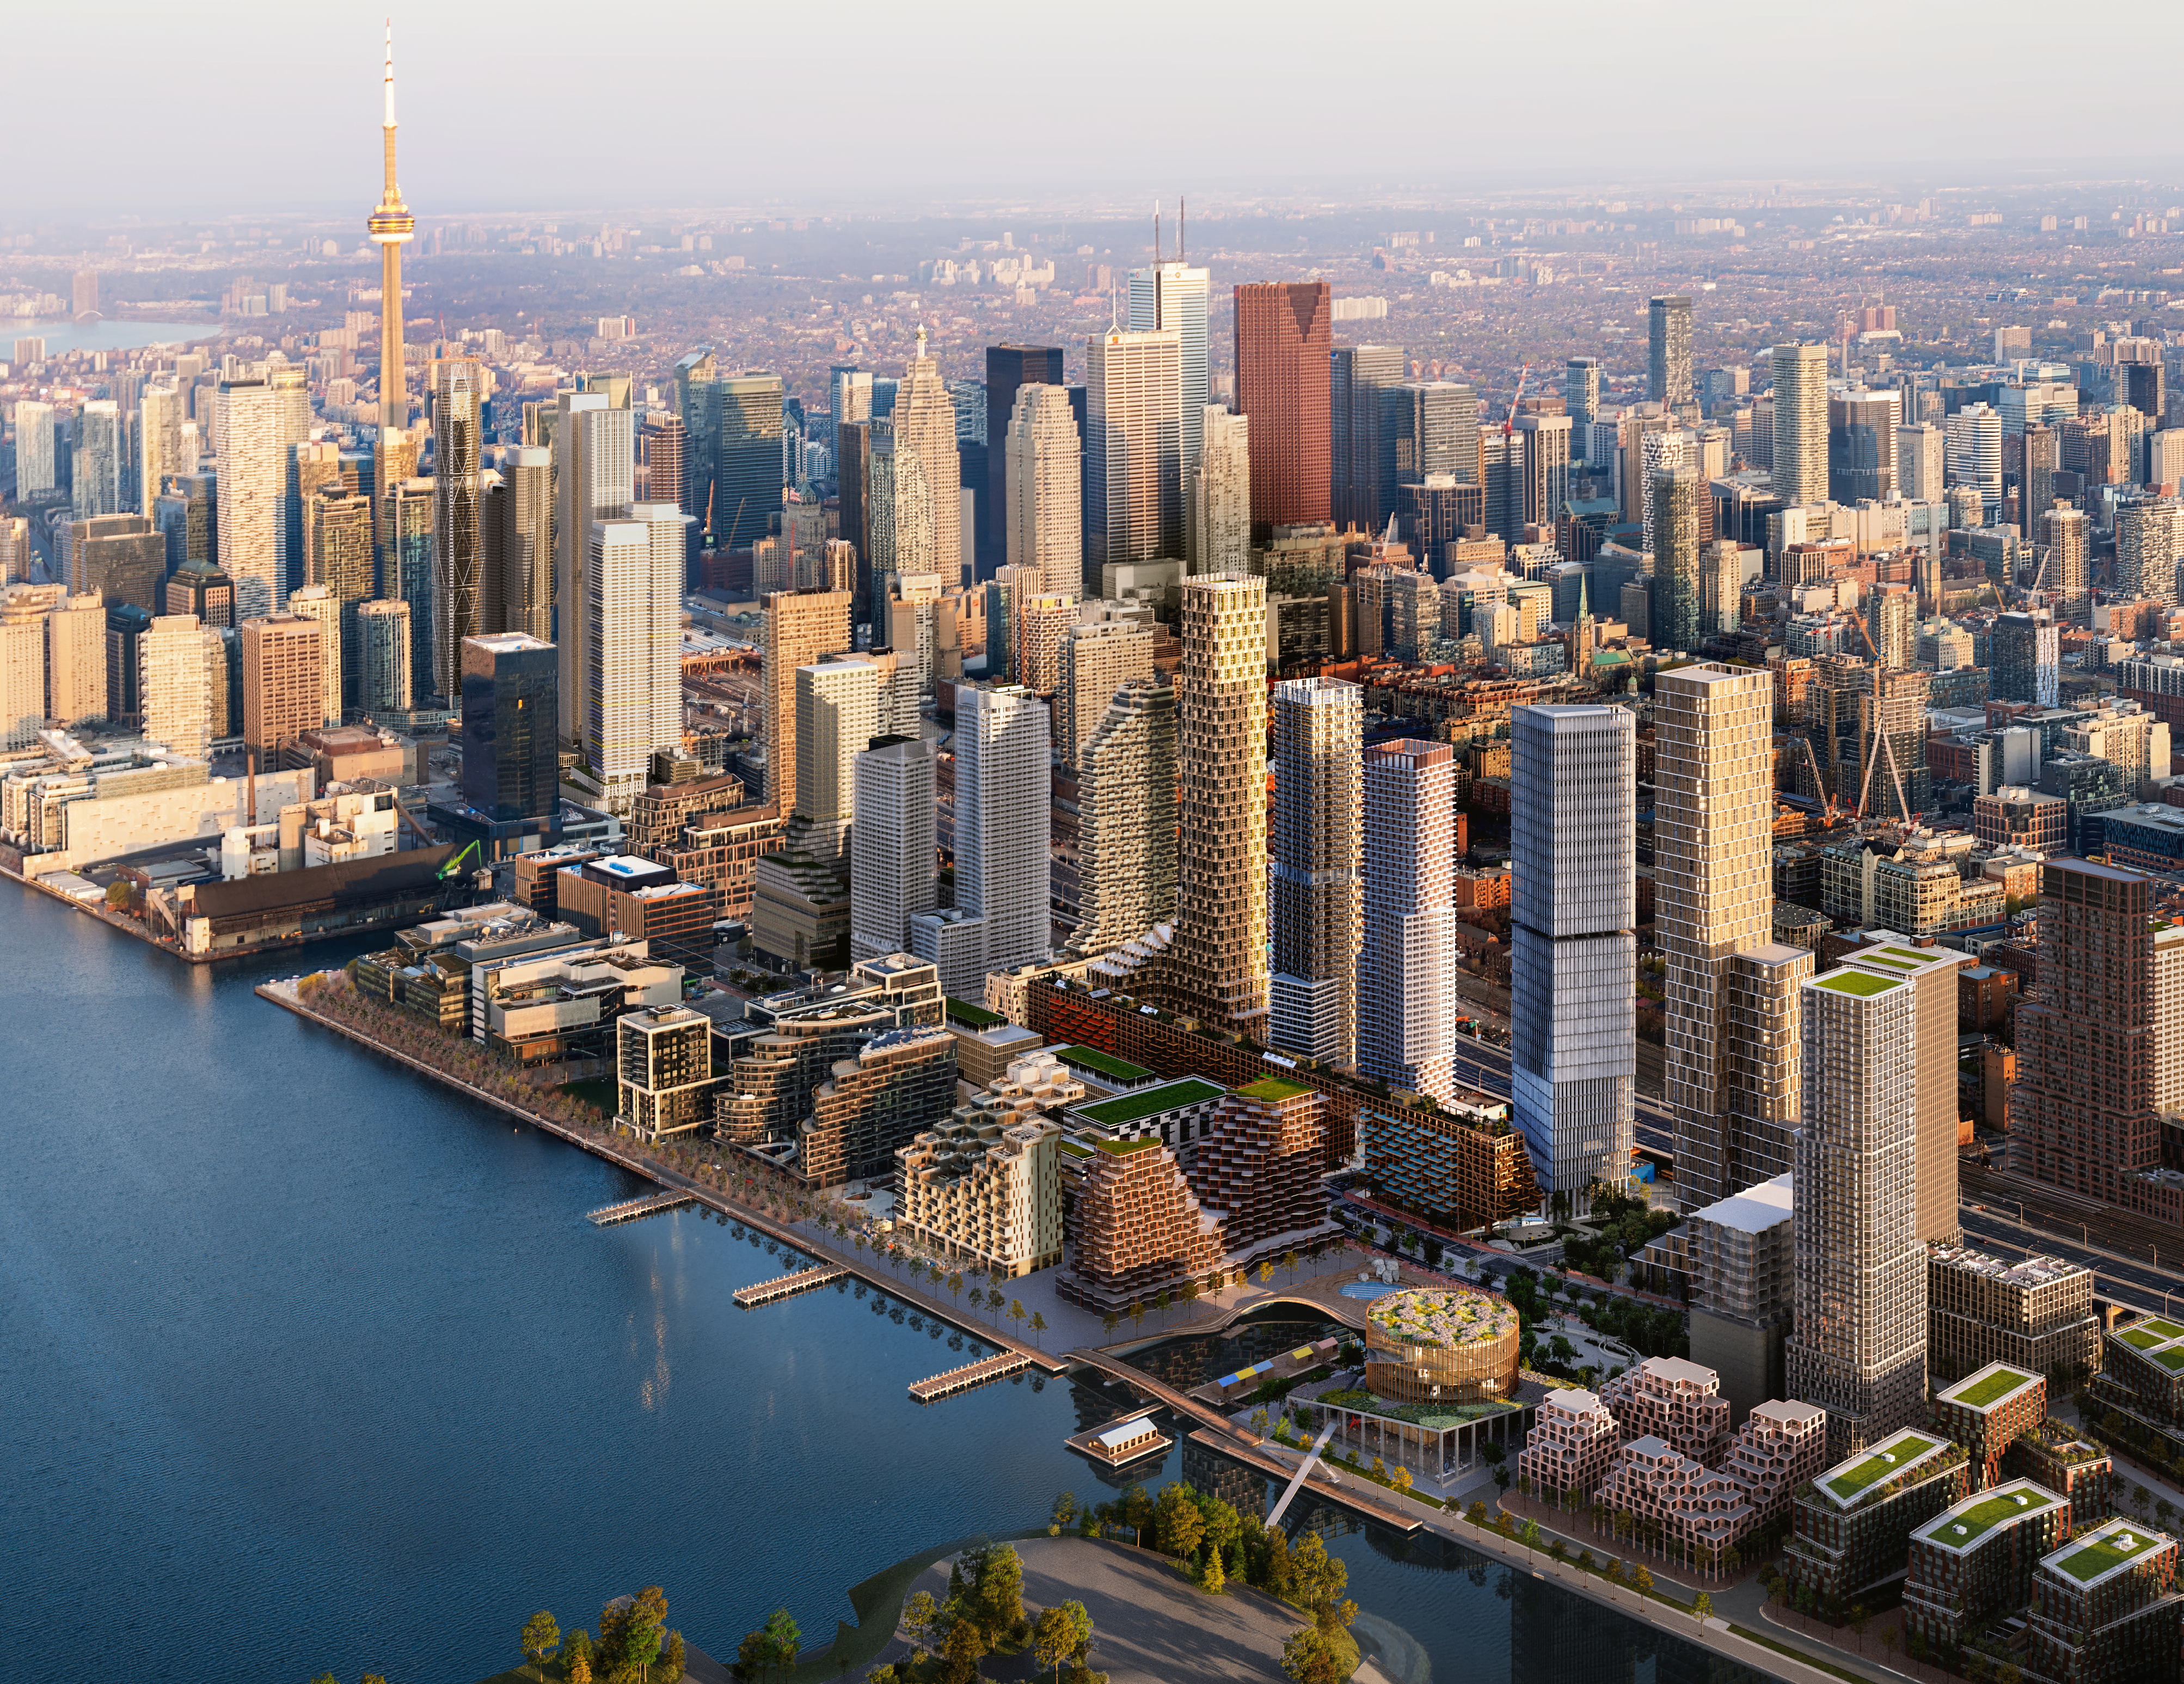 Rendering of Toronto's waterfront quayside development.